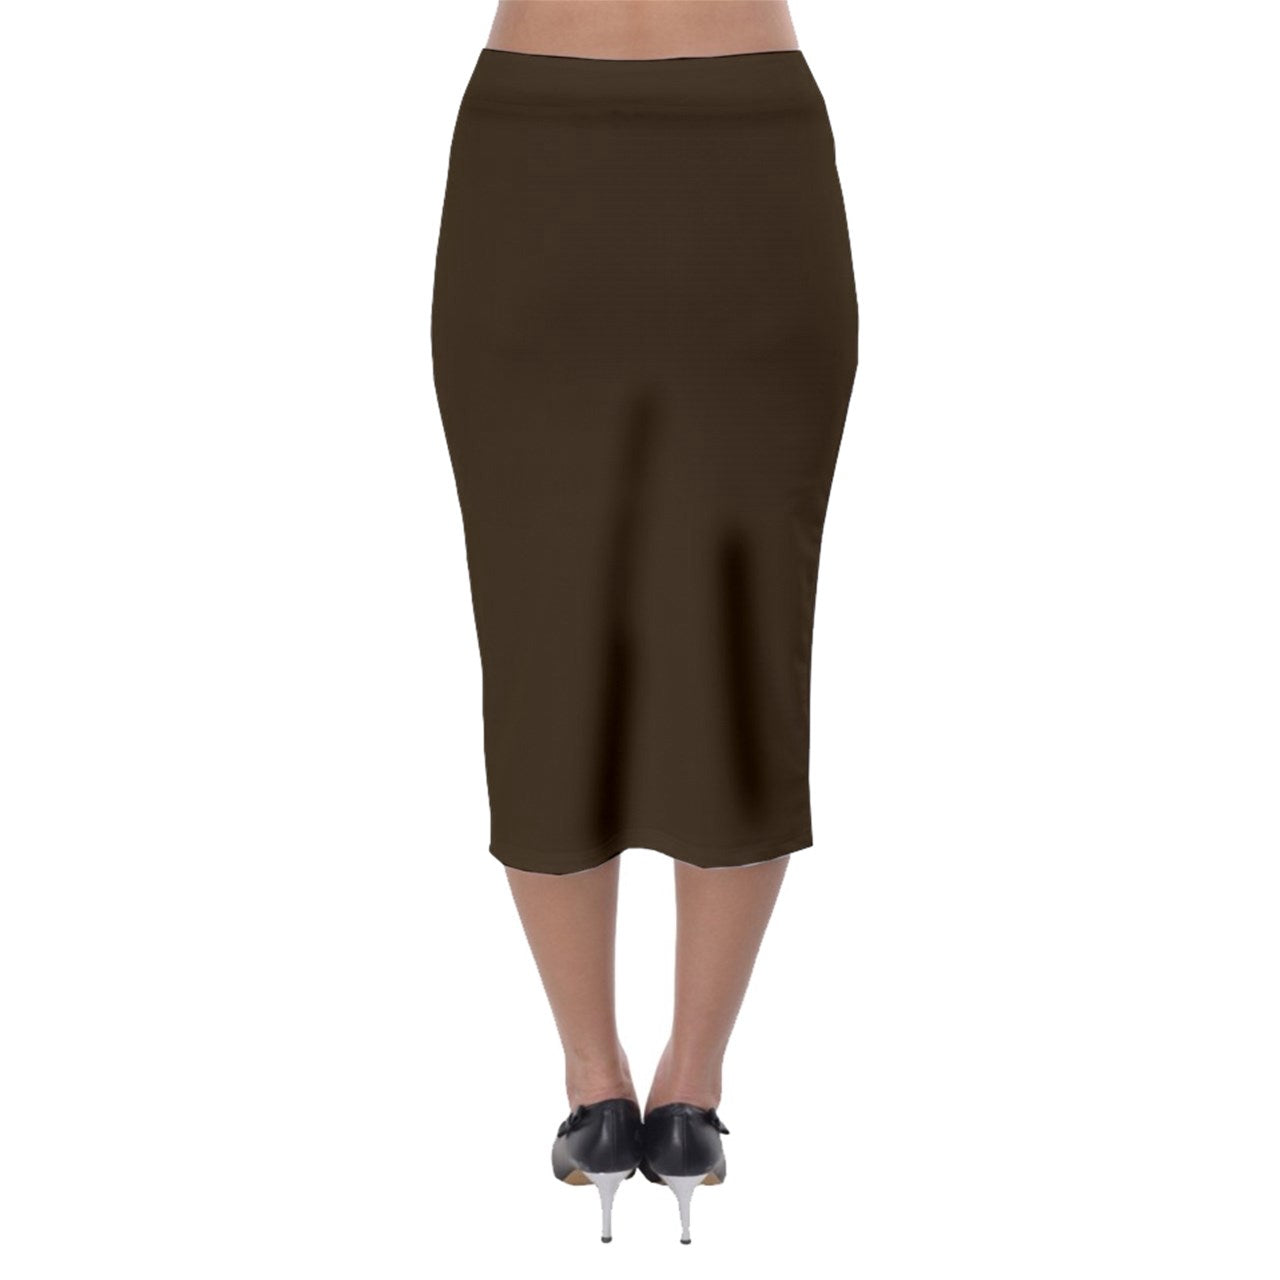 Chestnut Midi Pencil Skirt